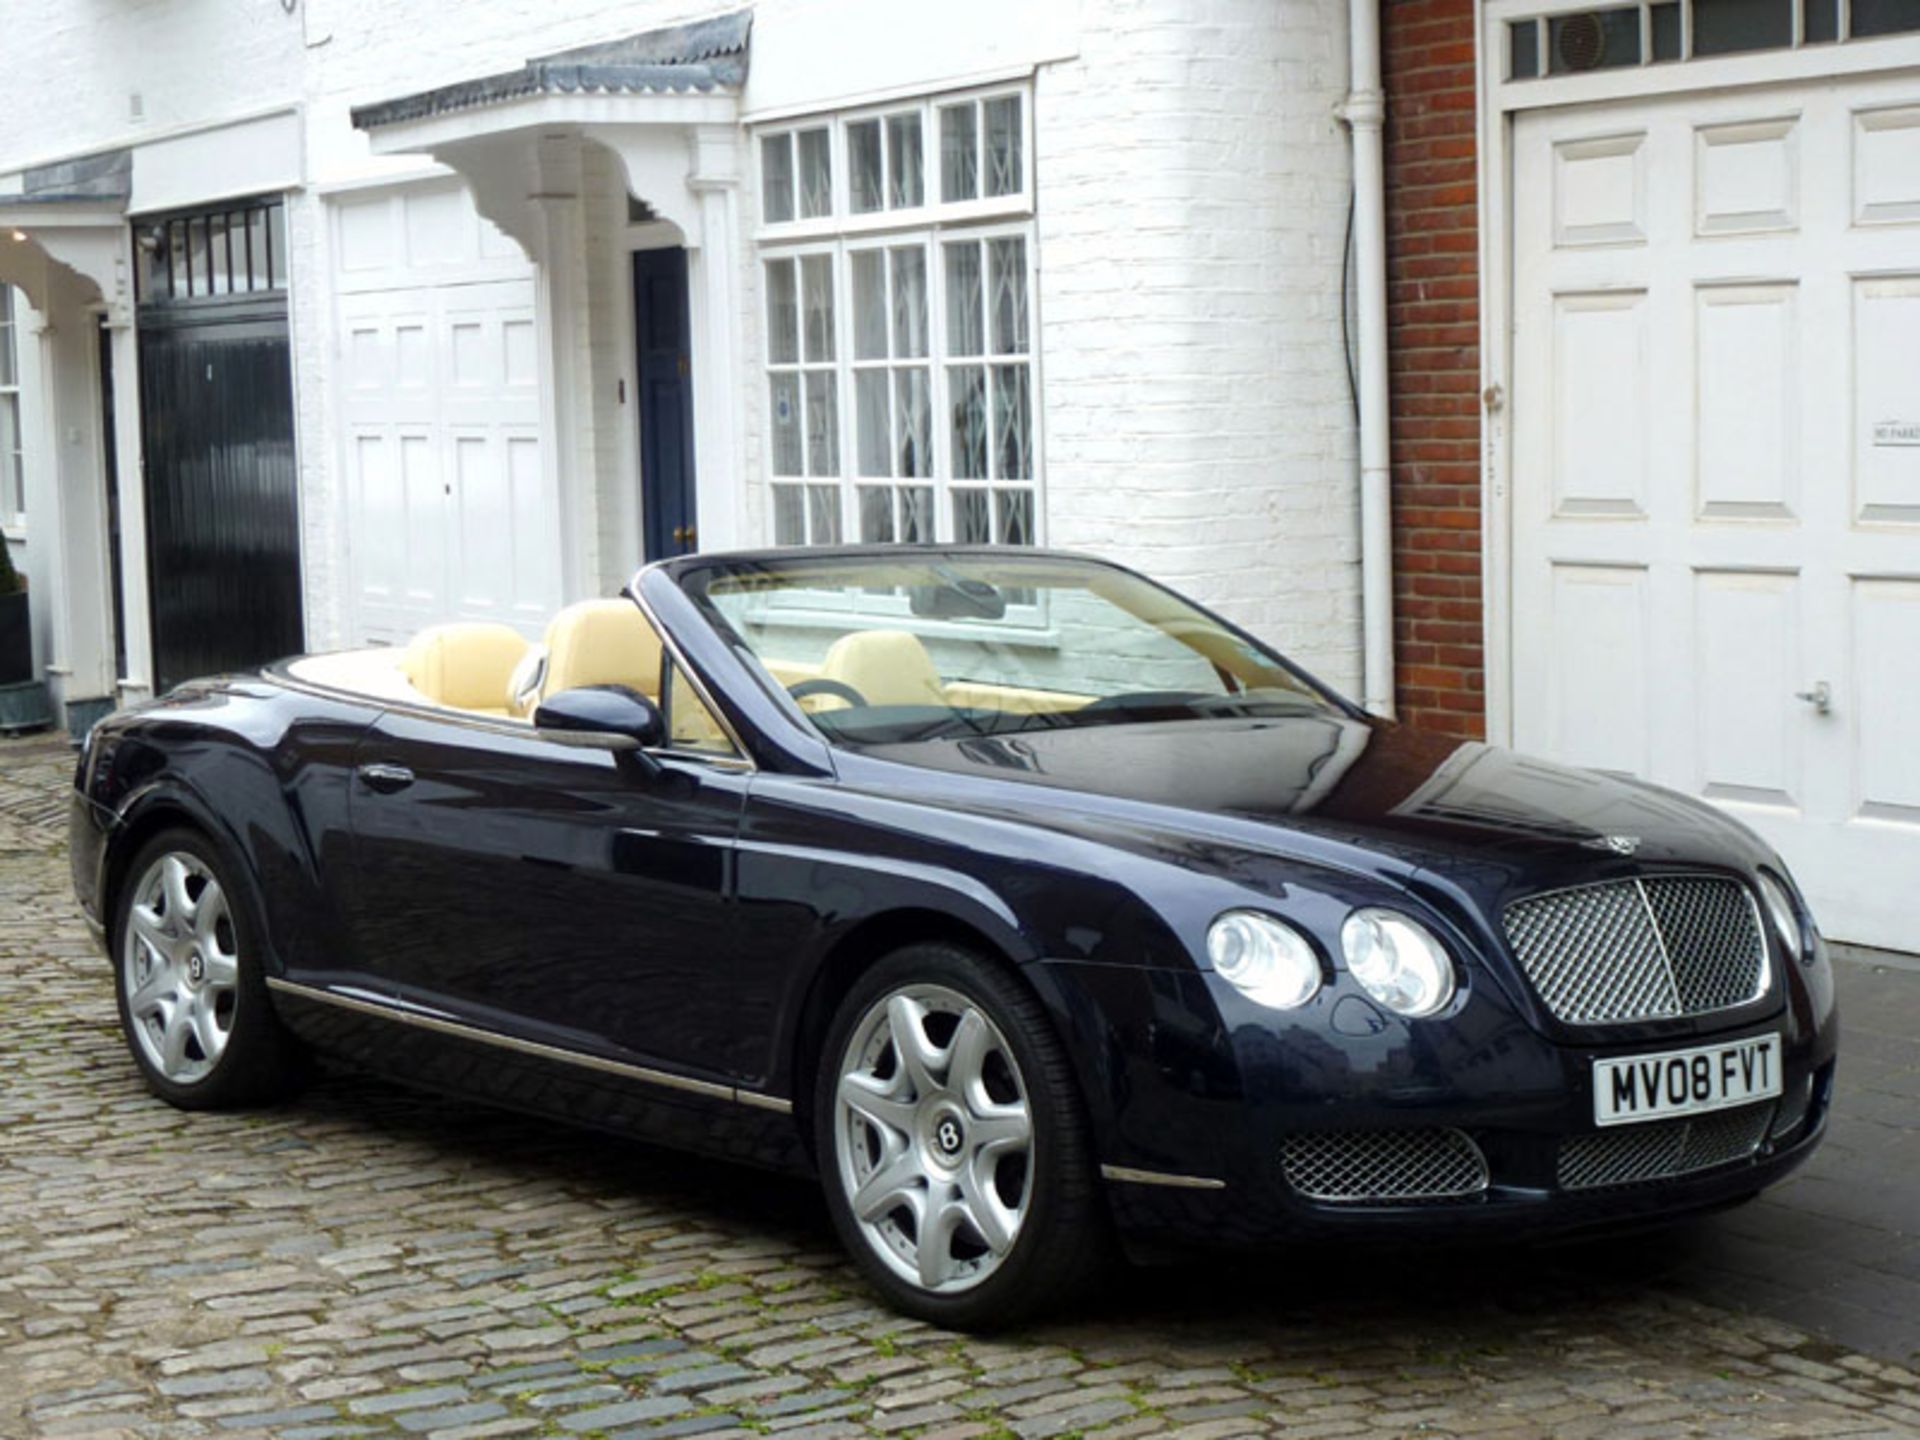 2008 Bentley Continental GTC - Image 2 of 10